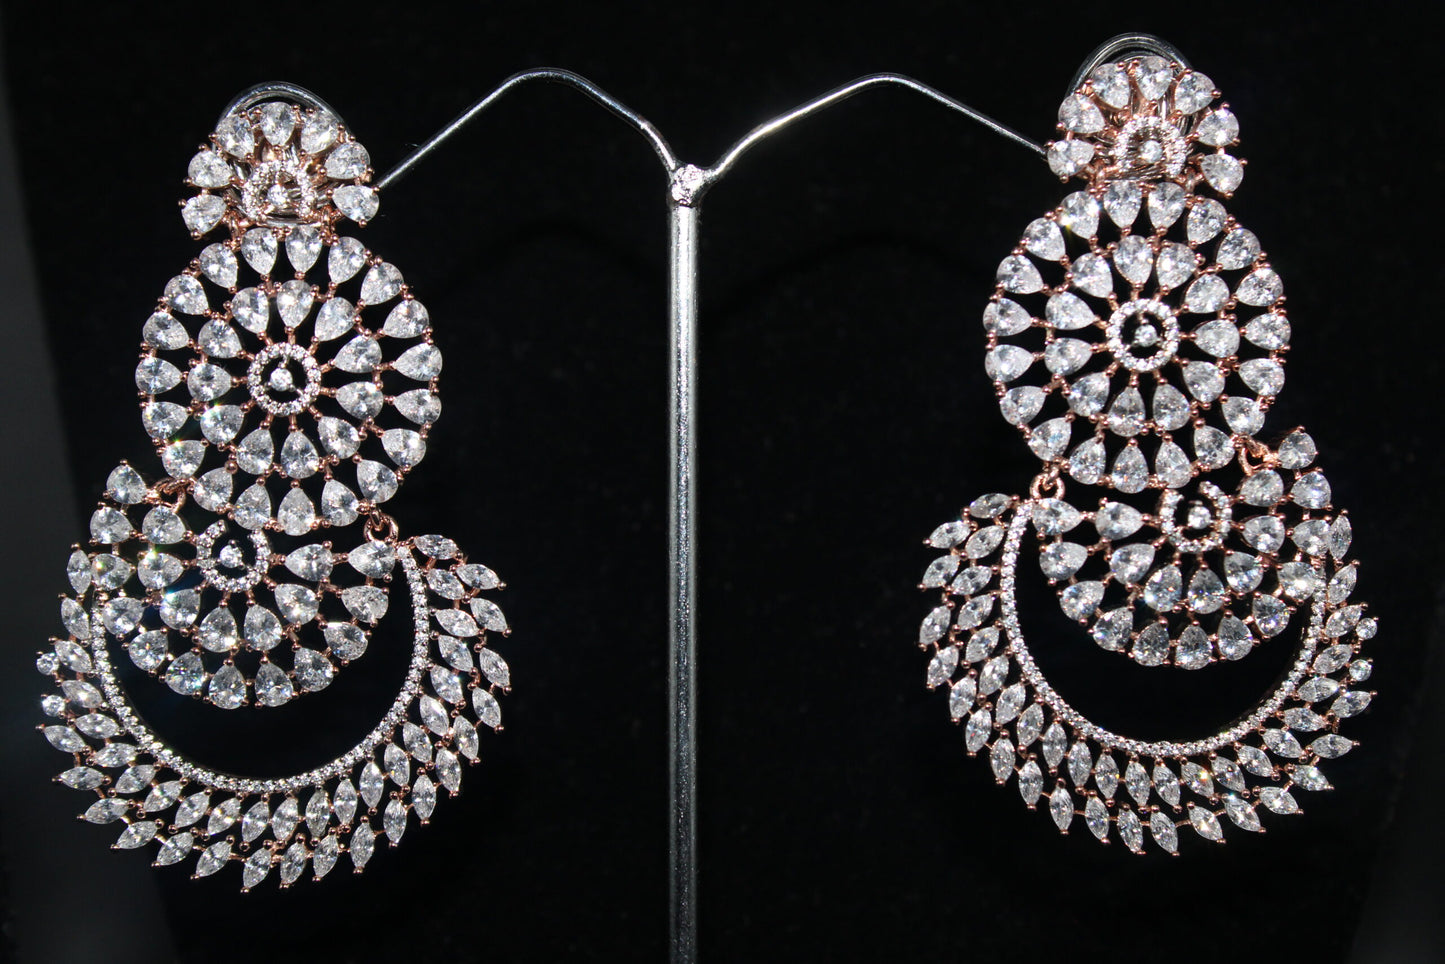 Chand bali designed american diamond earrings